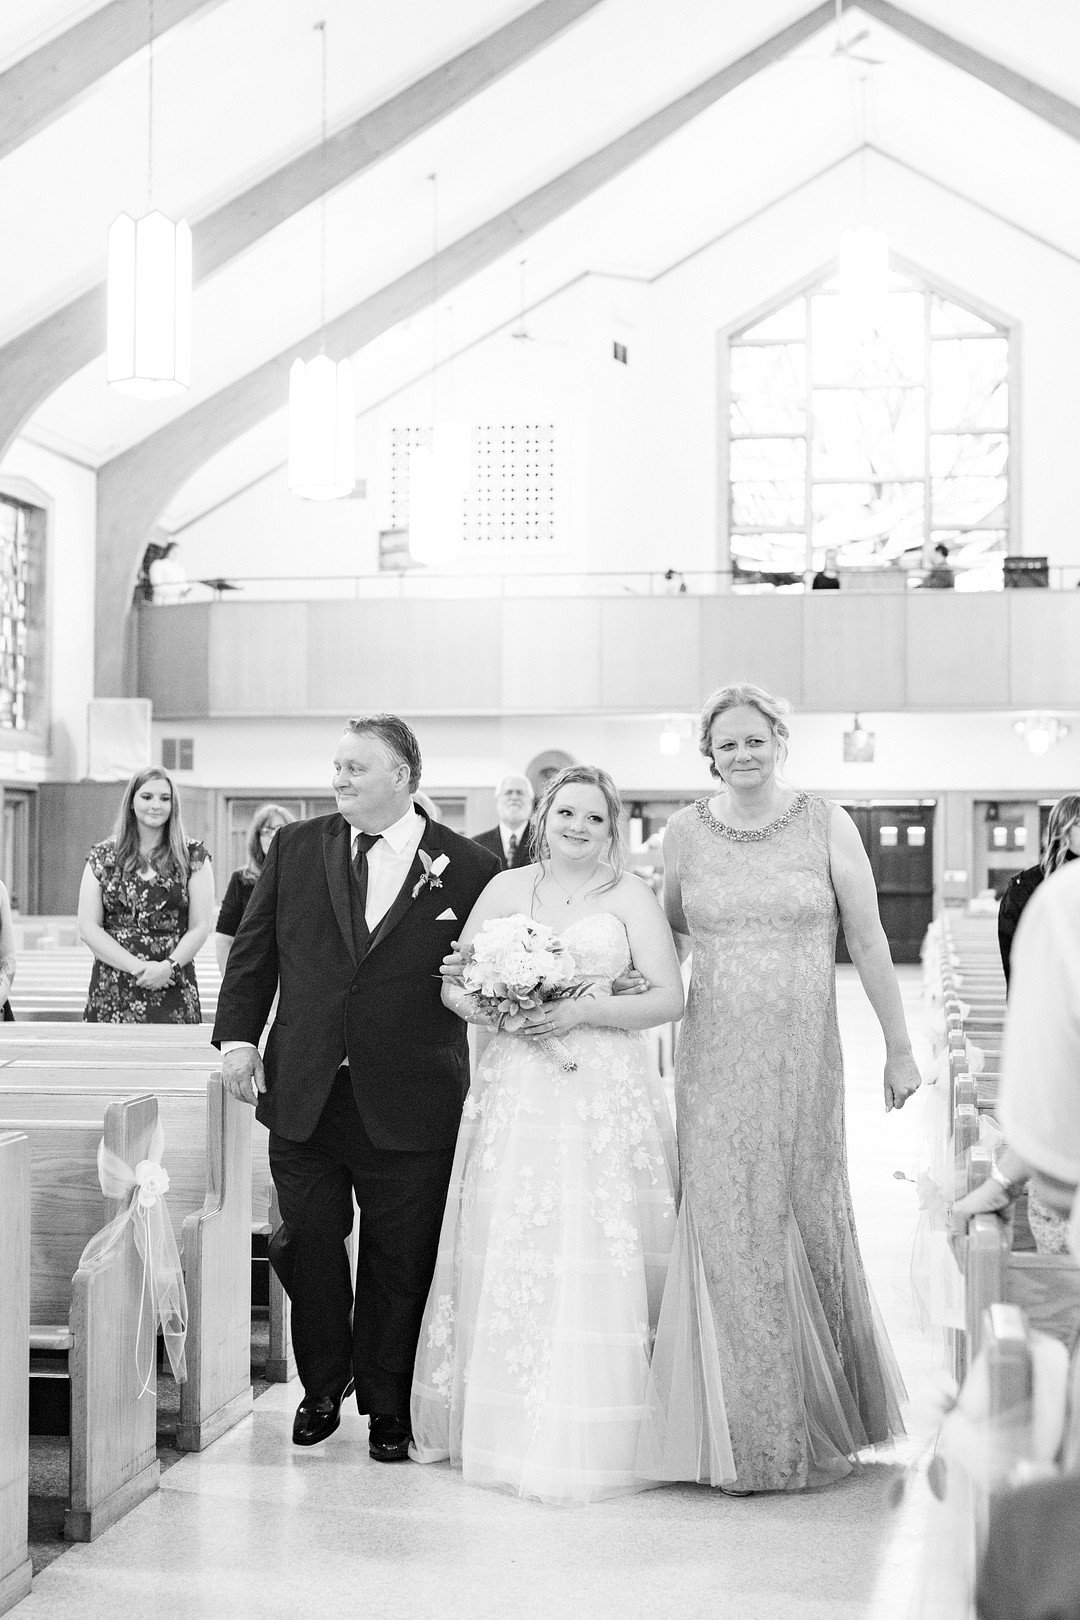 Crowley_Crowley_Victoria Rayburn Photography_crowley-wedding-highlights-68_low.jpg